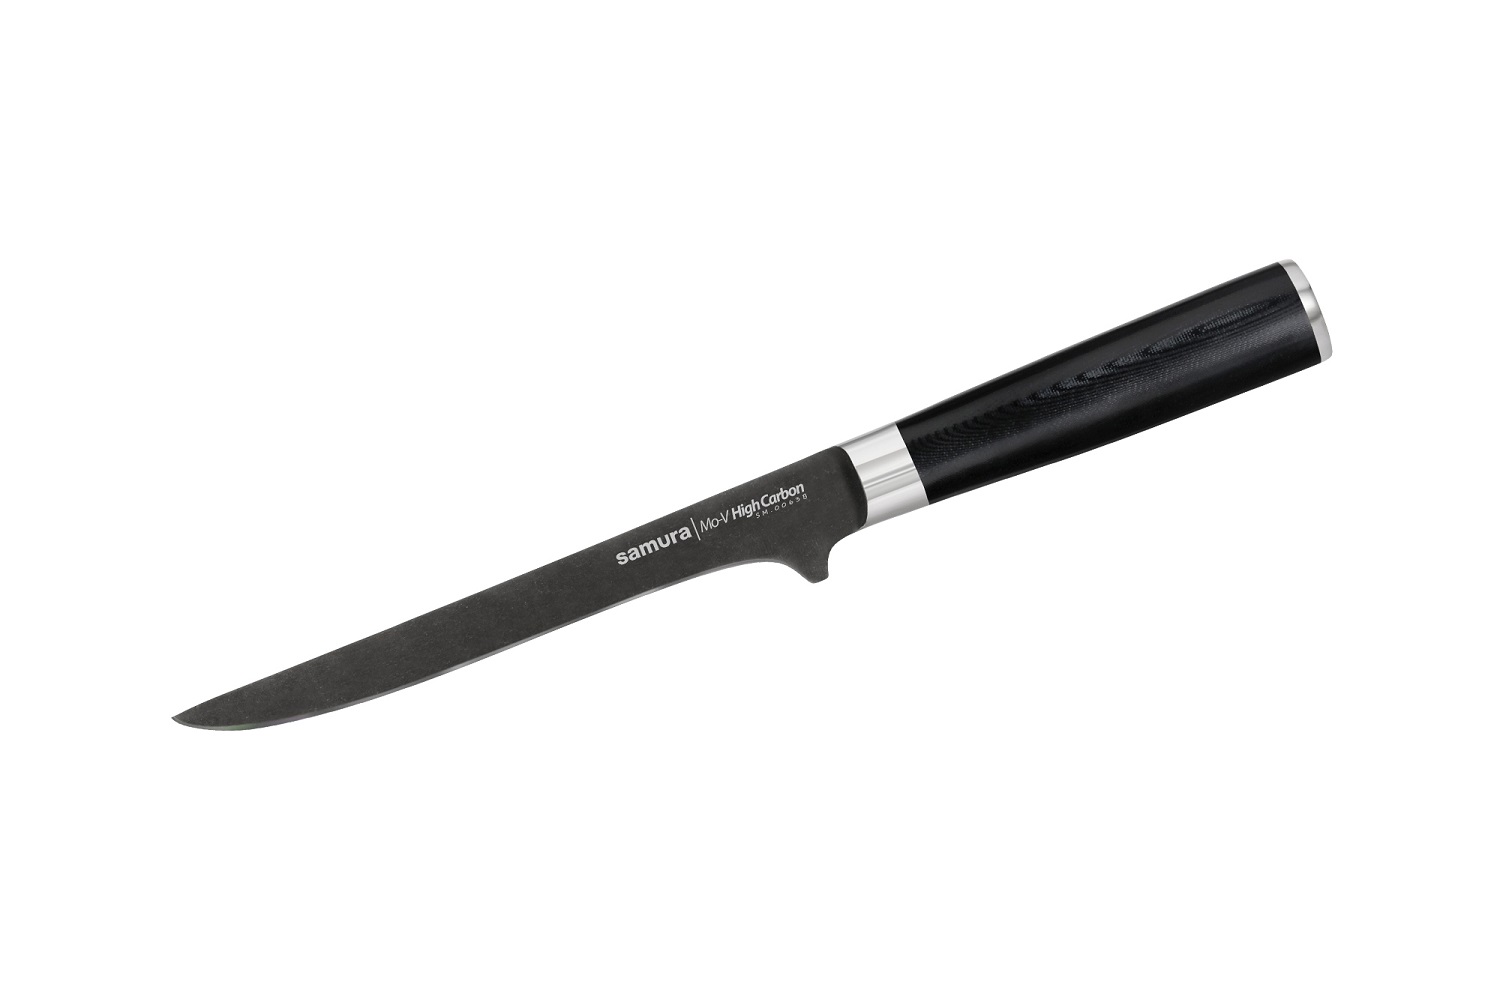 Нож Samura обвалочный Mo-V Stonewash, 16,5 см, G-10 нож samura для нарезки mo v stonewash 23 см g 10